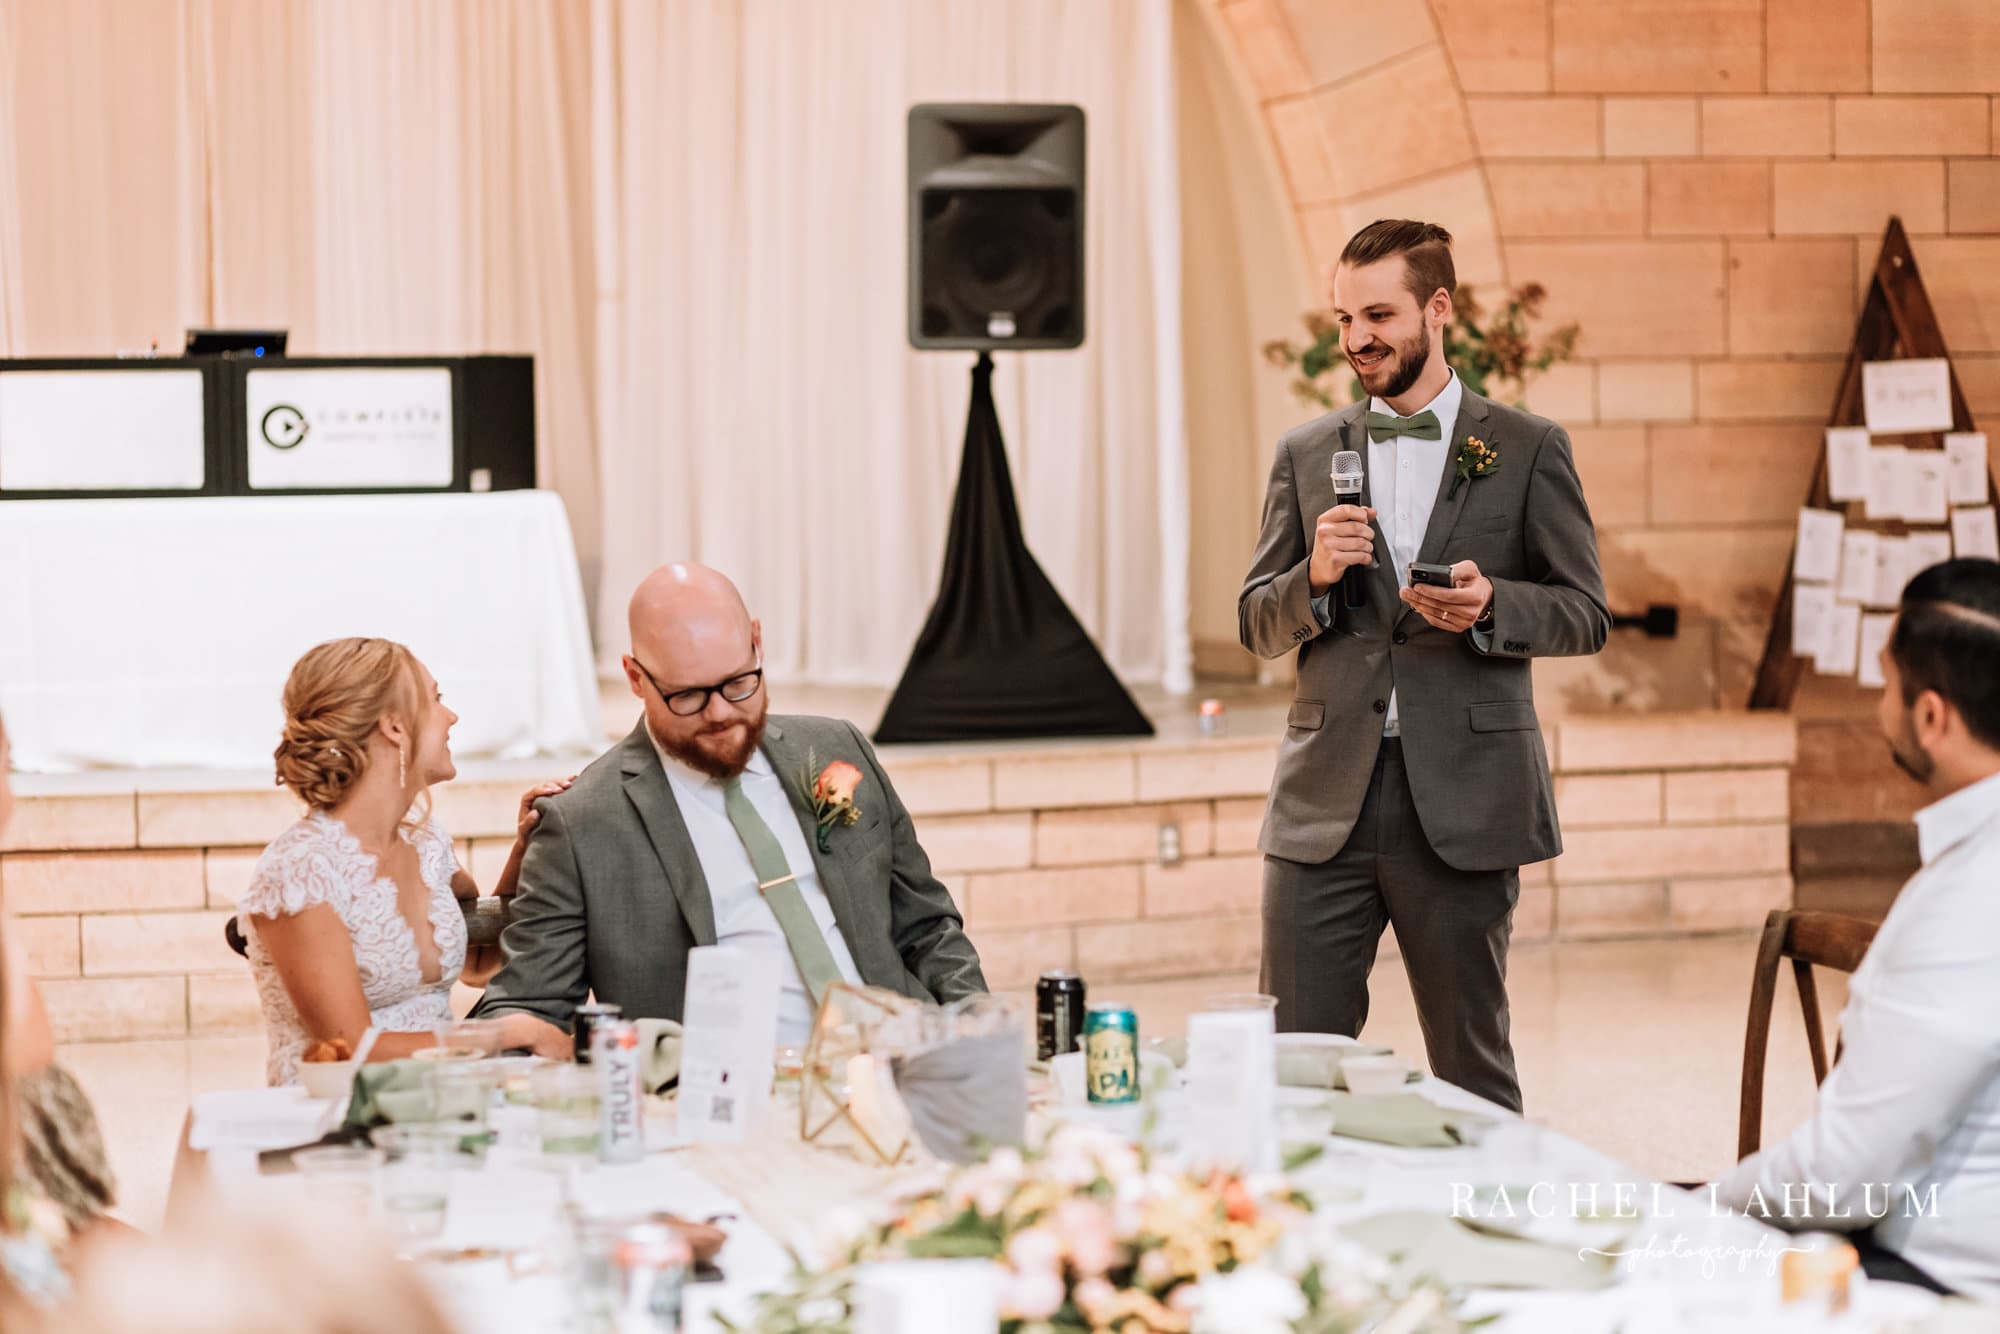 Best man gives speech during wedding reception at Harriet Island Pavilion in St. Paul, Minnesota.